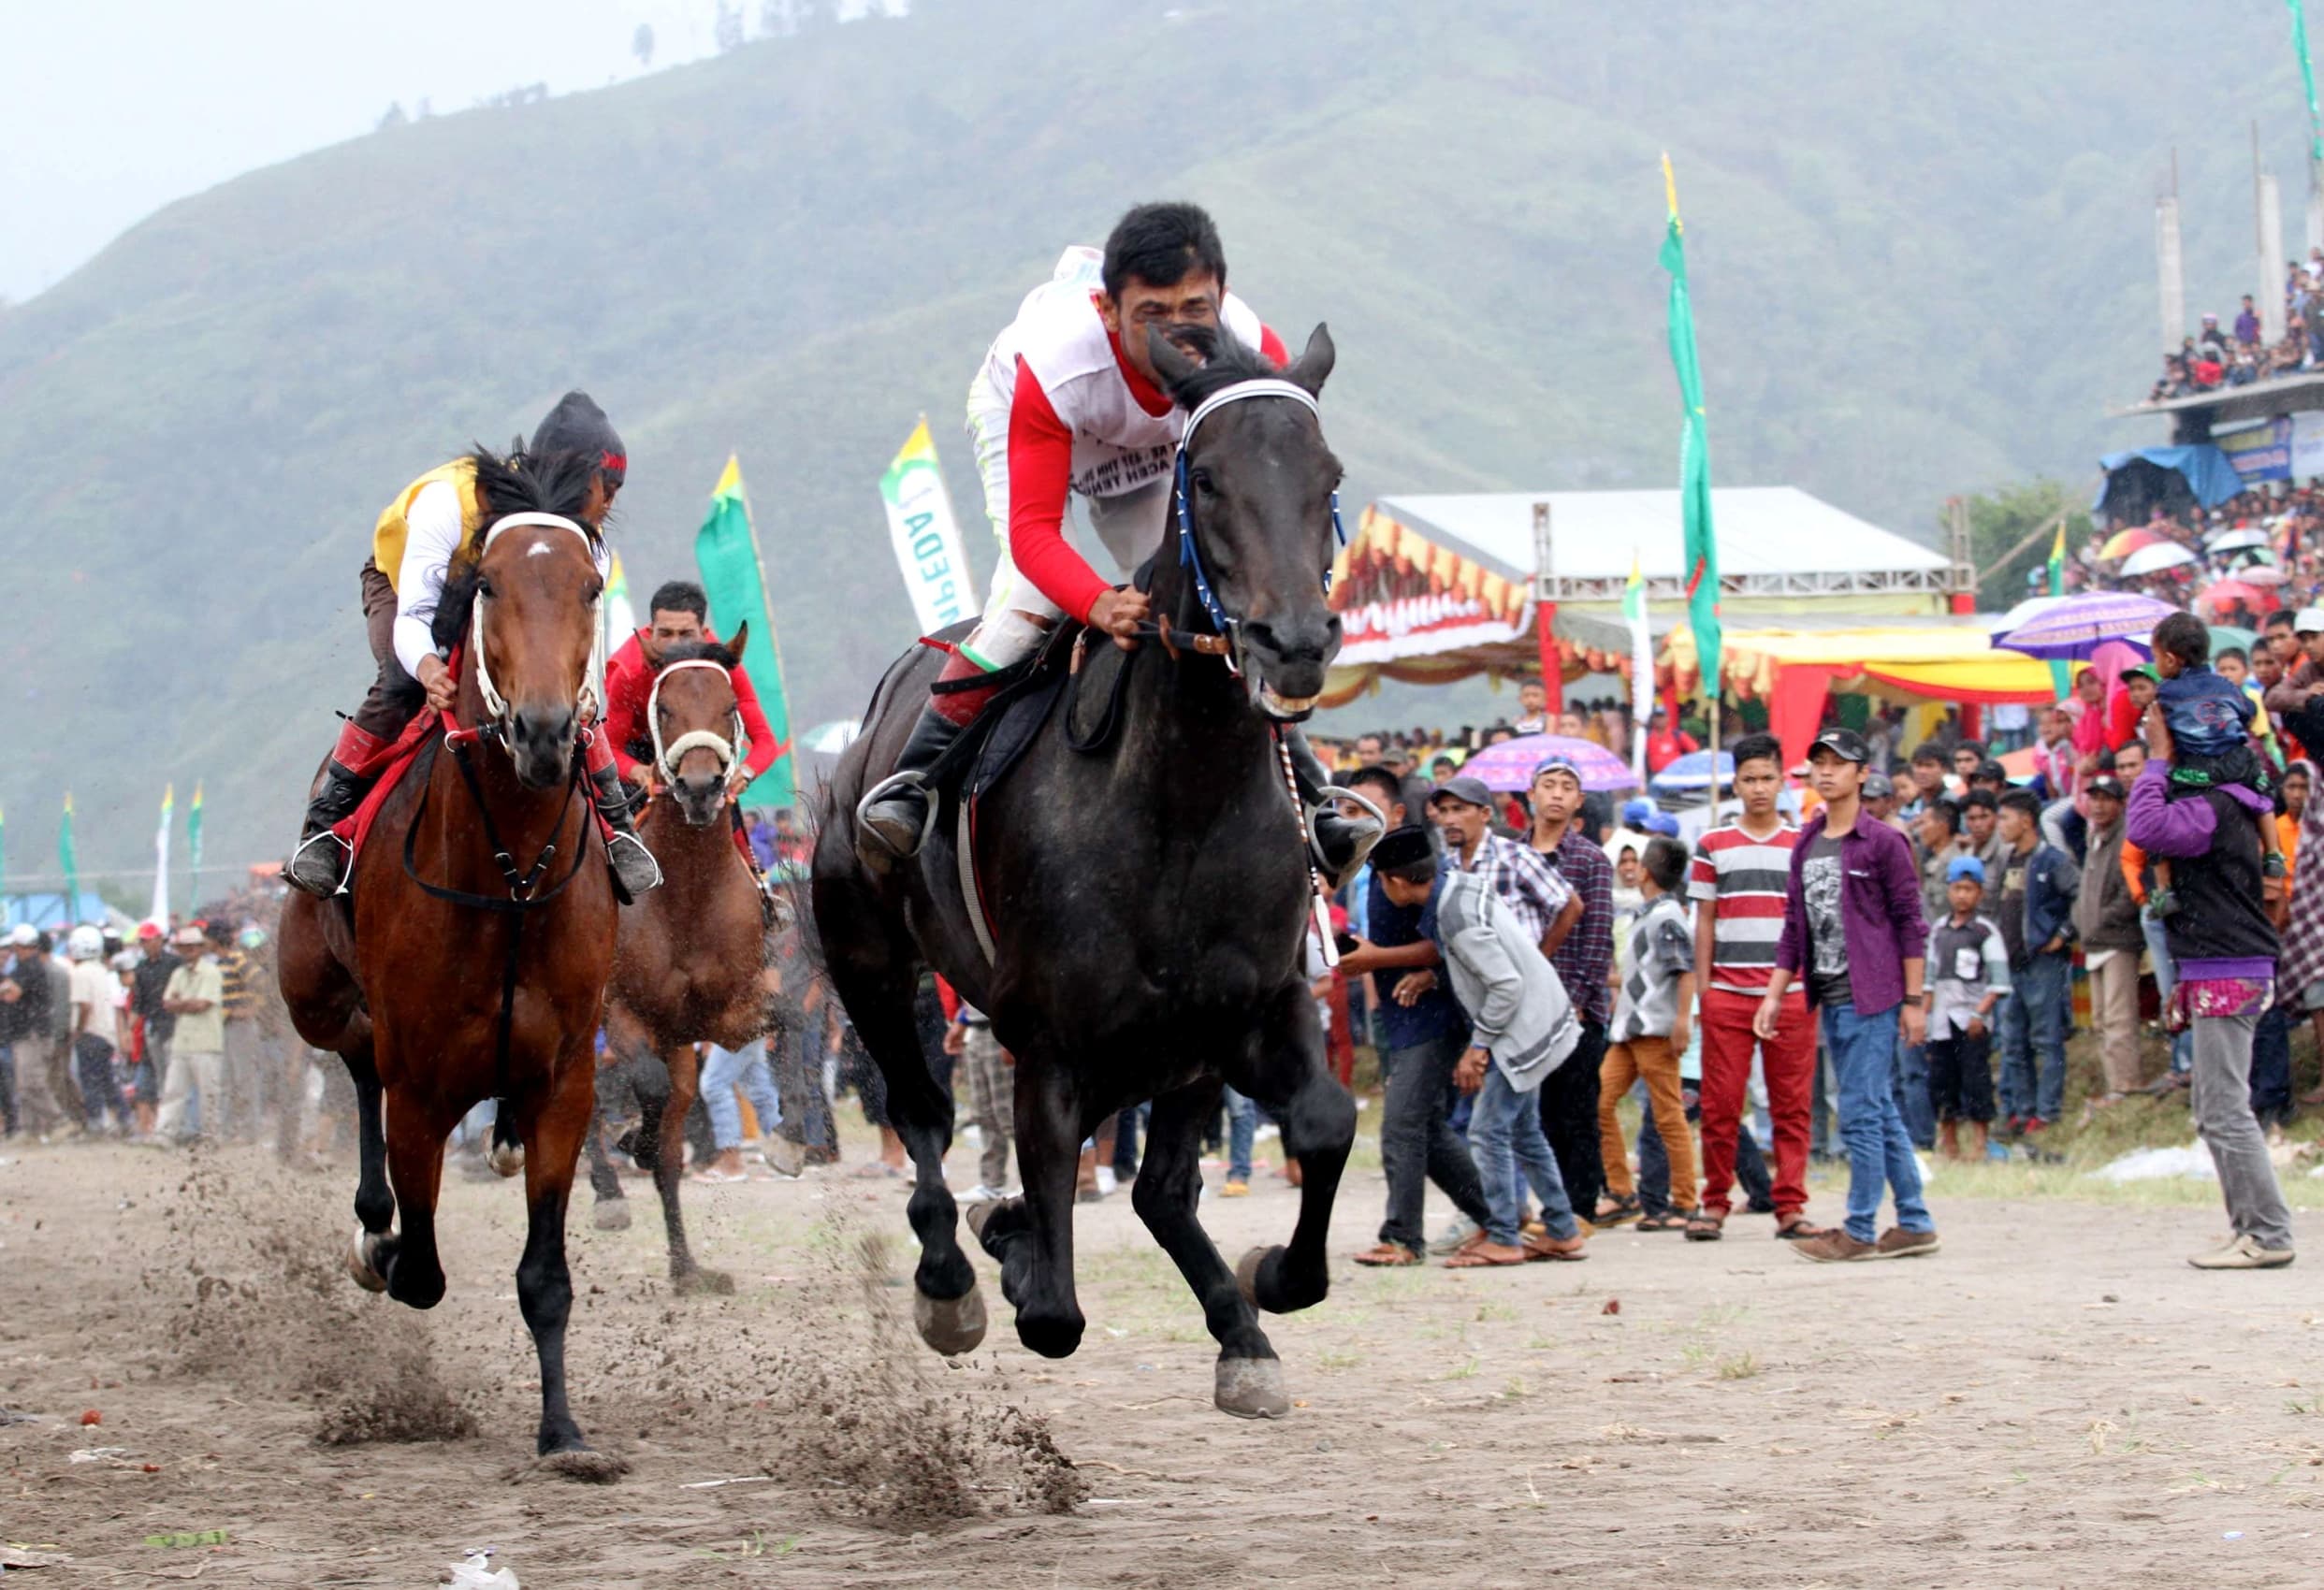 Tradisi Pacu Kude di Aceh untuk menyambut Hari Kemerdekaan. (Beritadaerah.co.id)